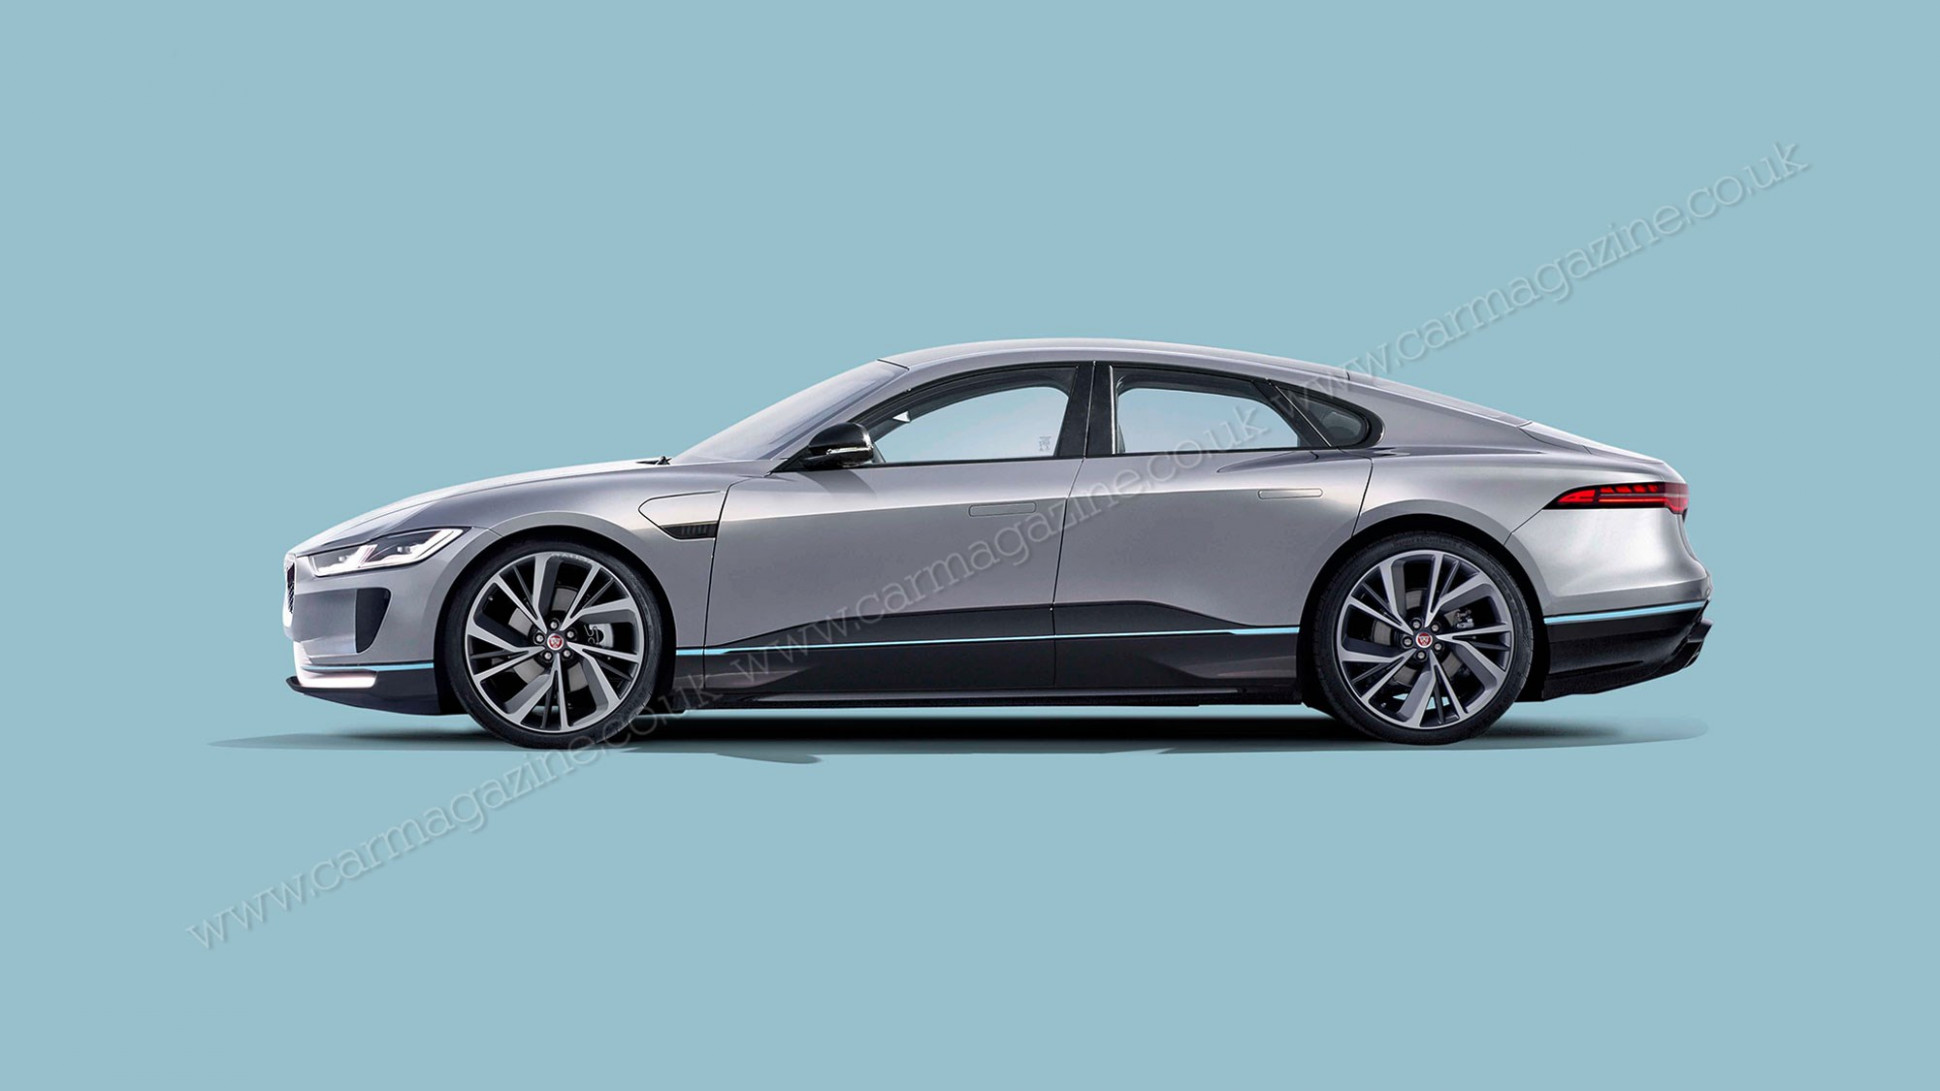 Price and Release date 2022 Jaguar Xj Release Date